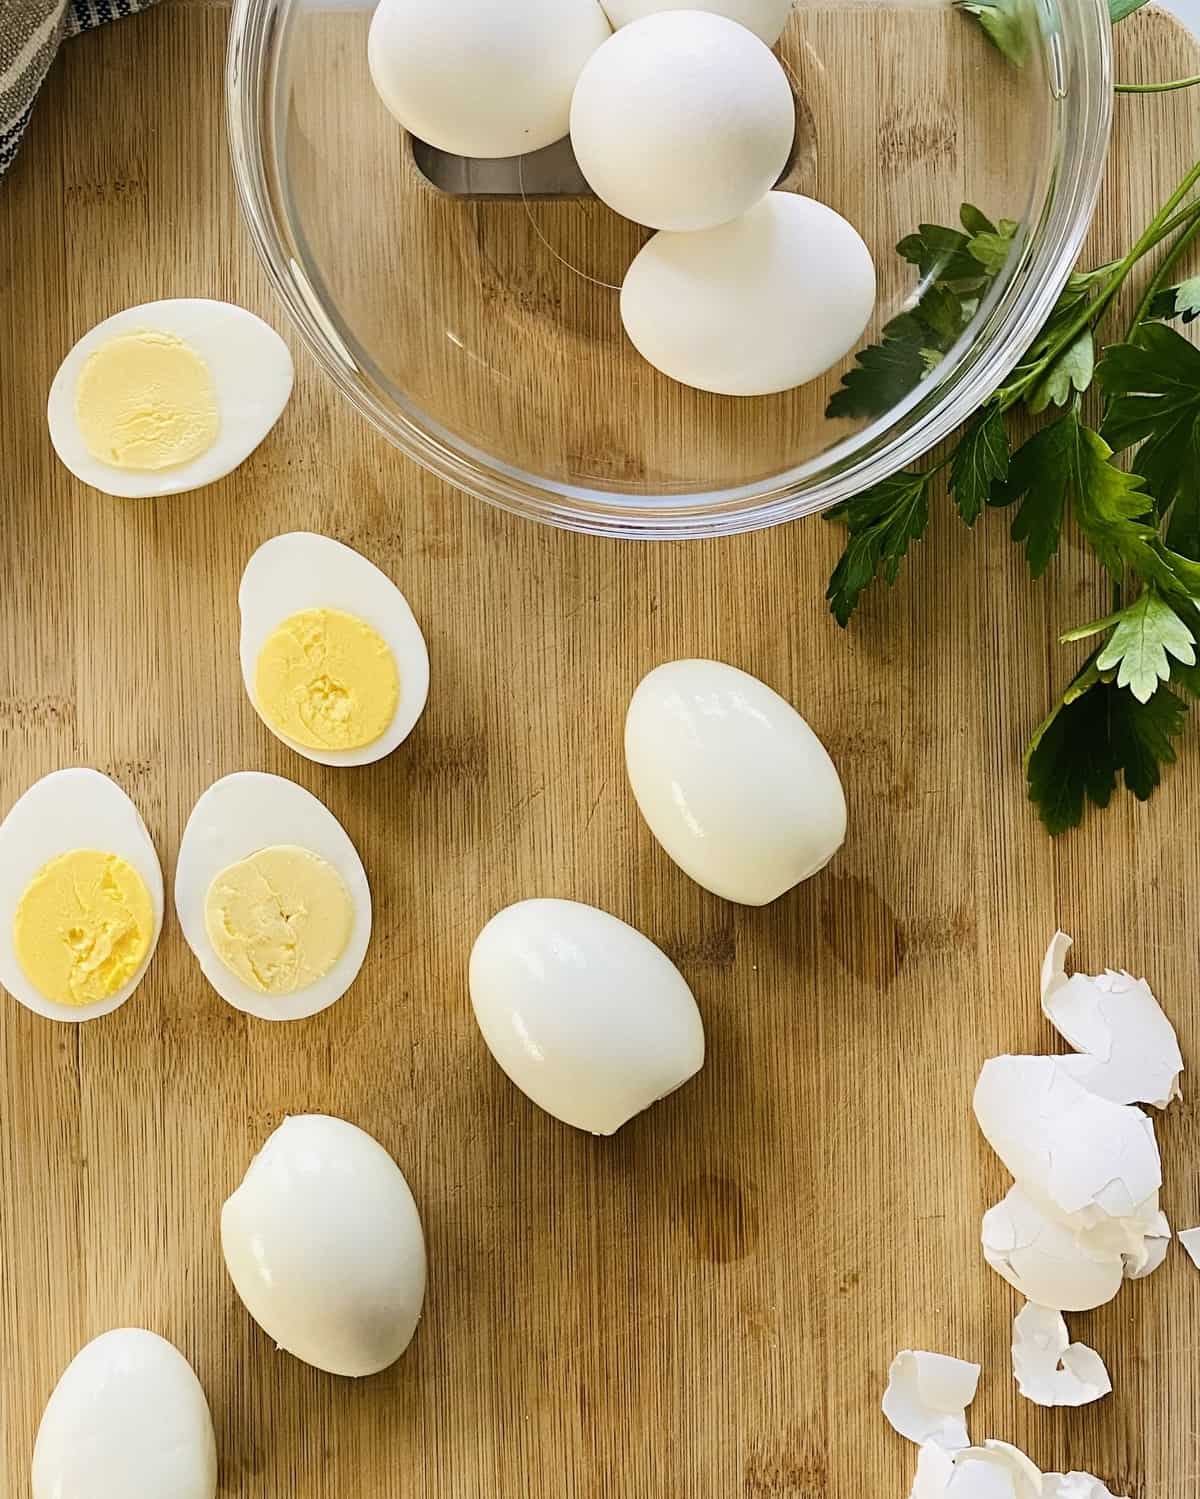 hard boiled eggs and egg shells